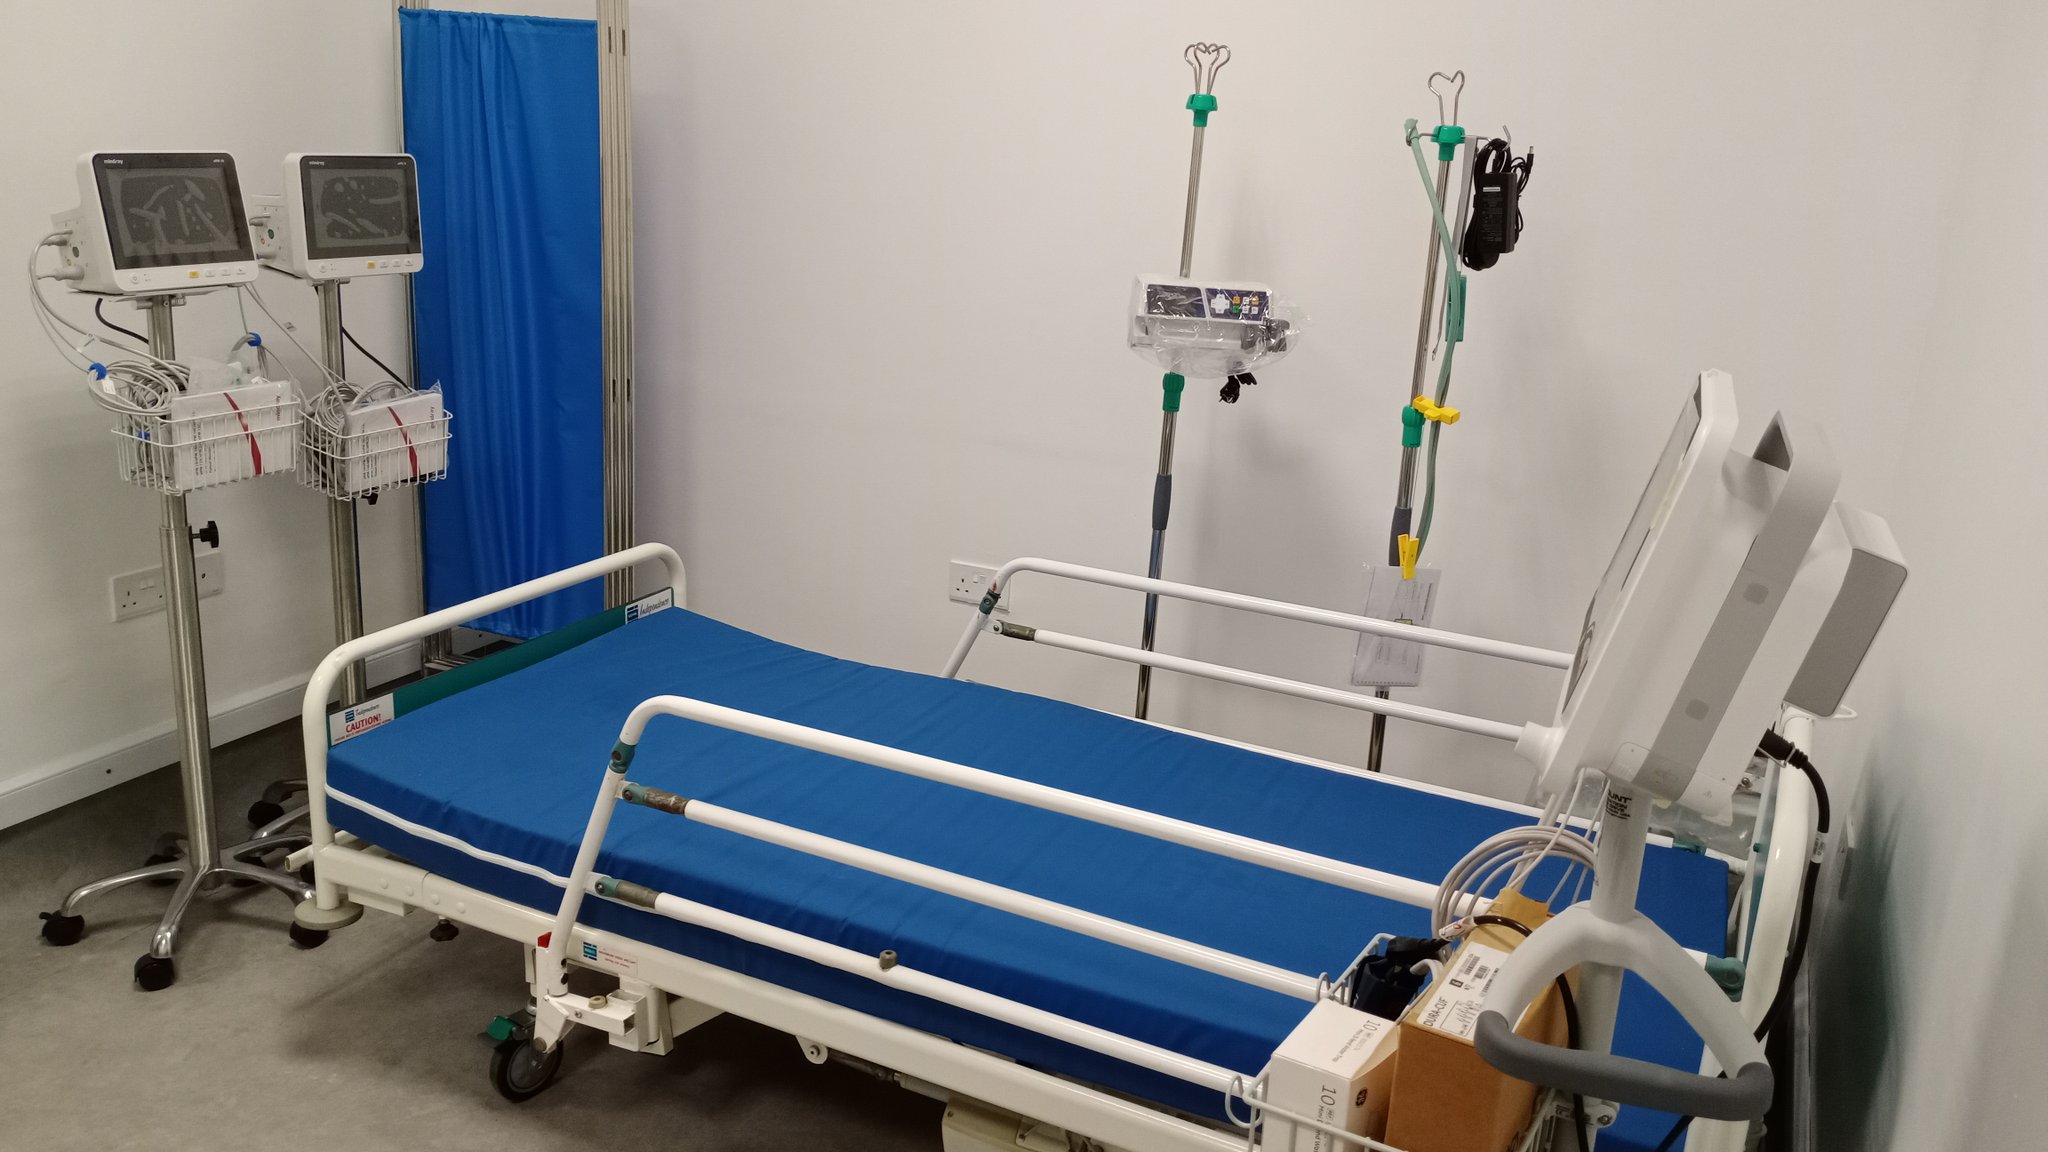 CACOVID Donates 150-Bed Isolation Centre to LASG